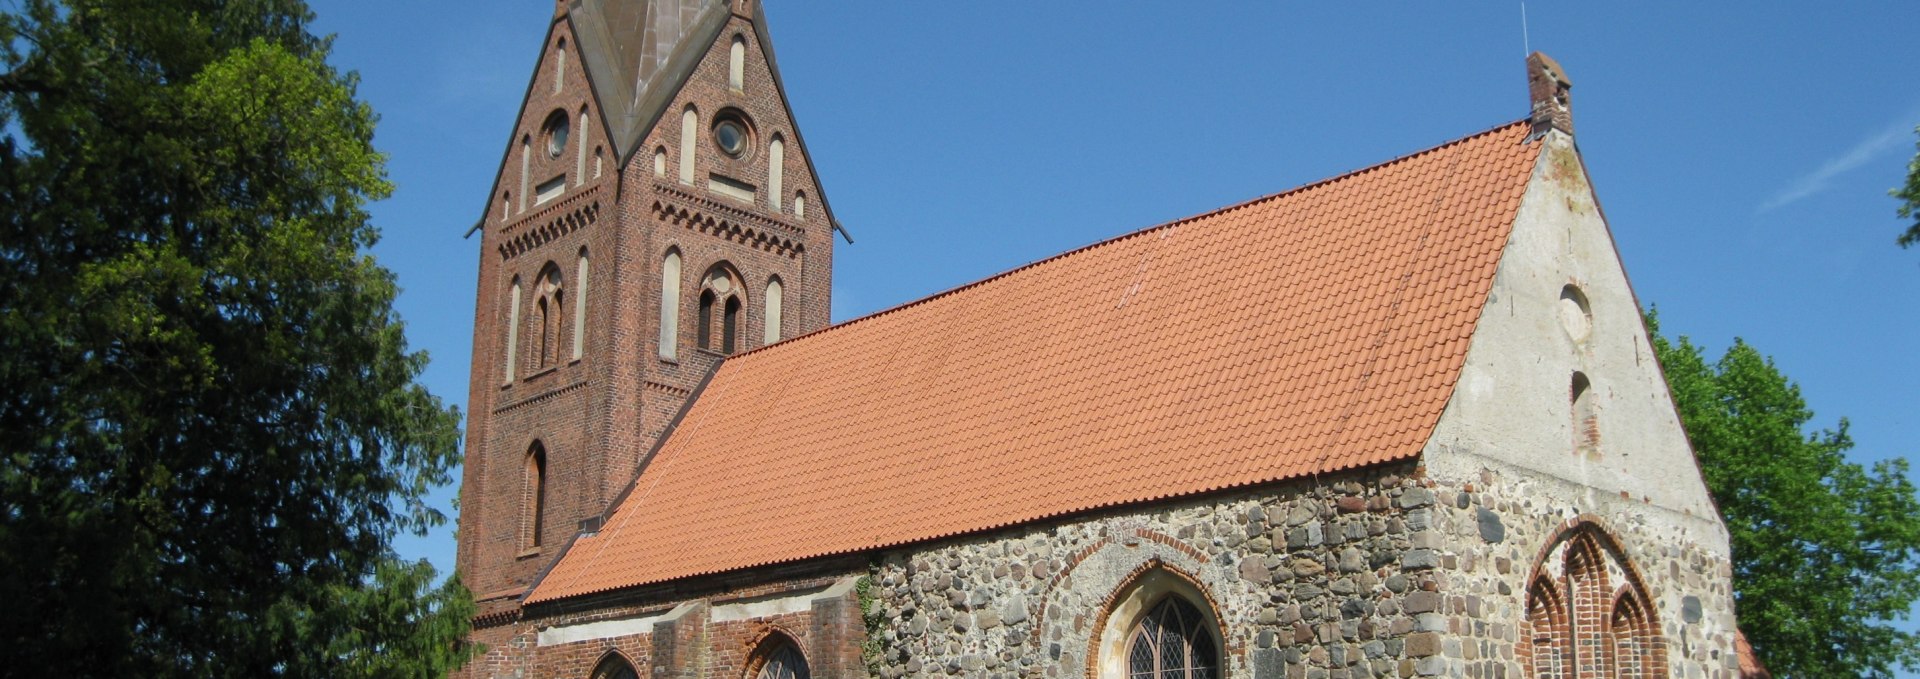 Kirche Hanshagen, © Tourismusverband Vorpommern e.V.